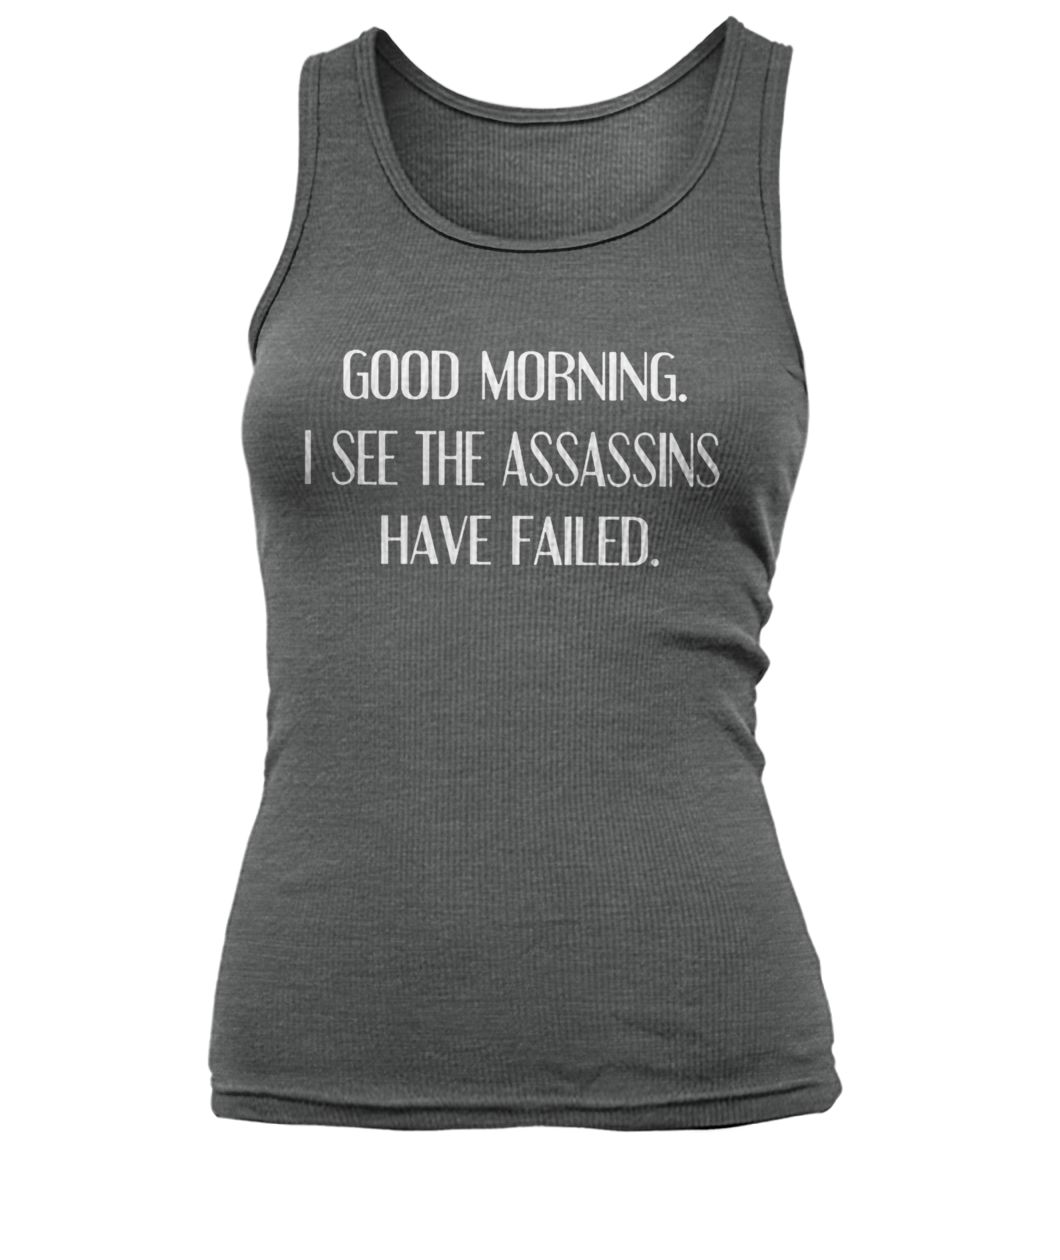 Good morning I see assassins failed women's tank top